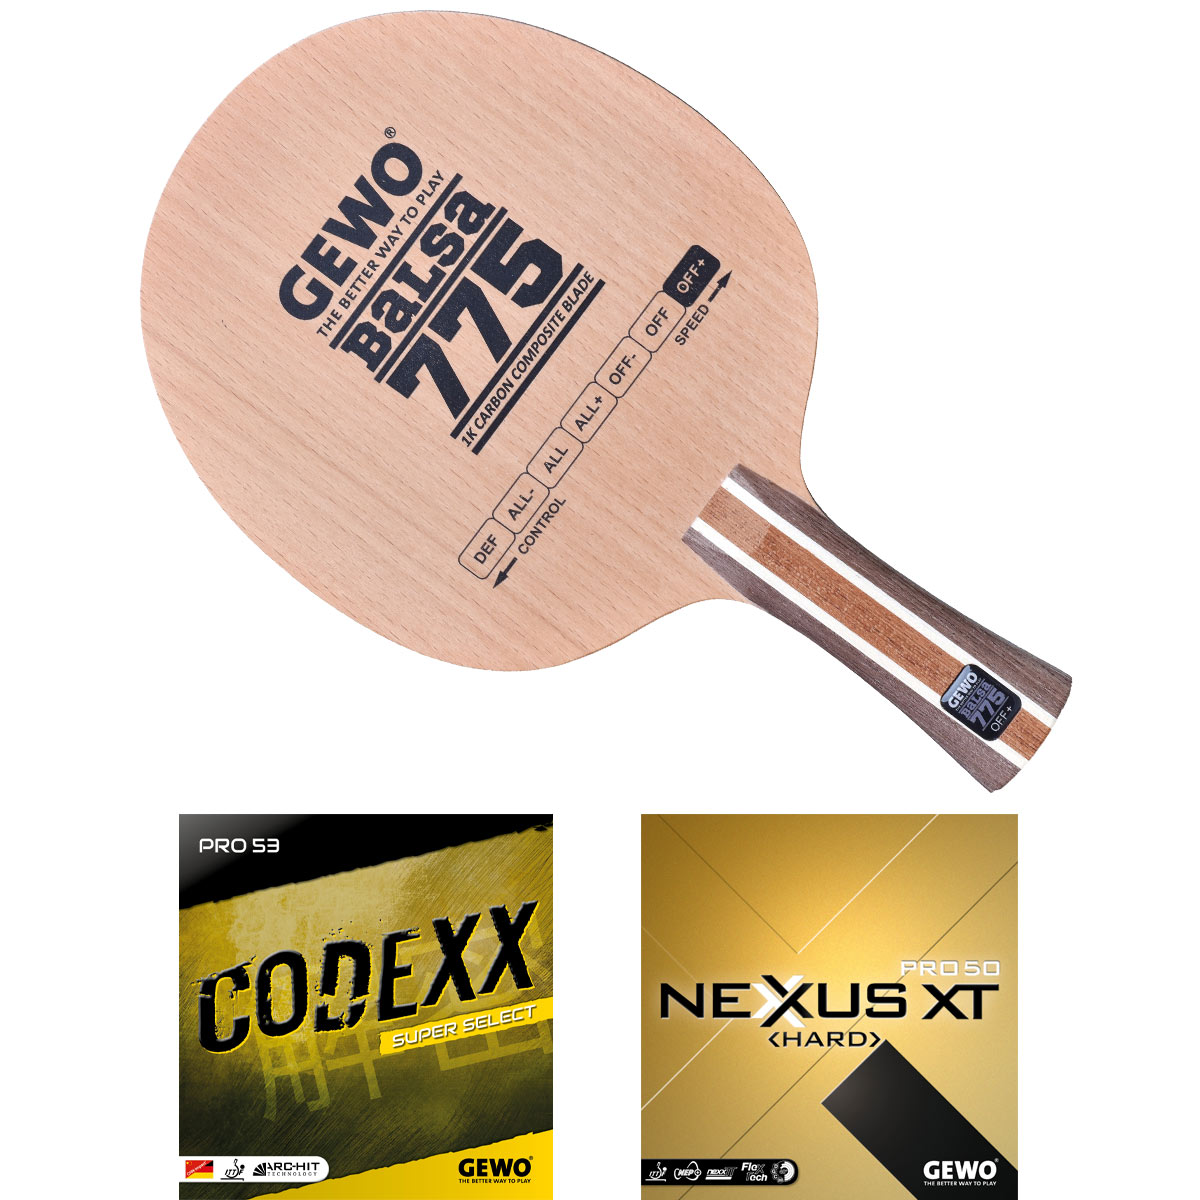 GEWO Bat: Blade Balsa Carbon 775 with Codexx Pro53 SupSel + Nexxus XT Pro50 Hard